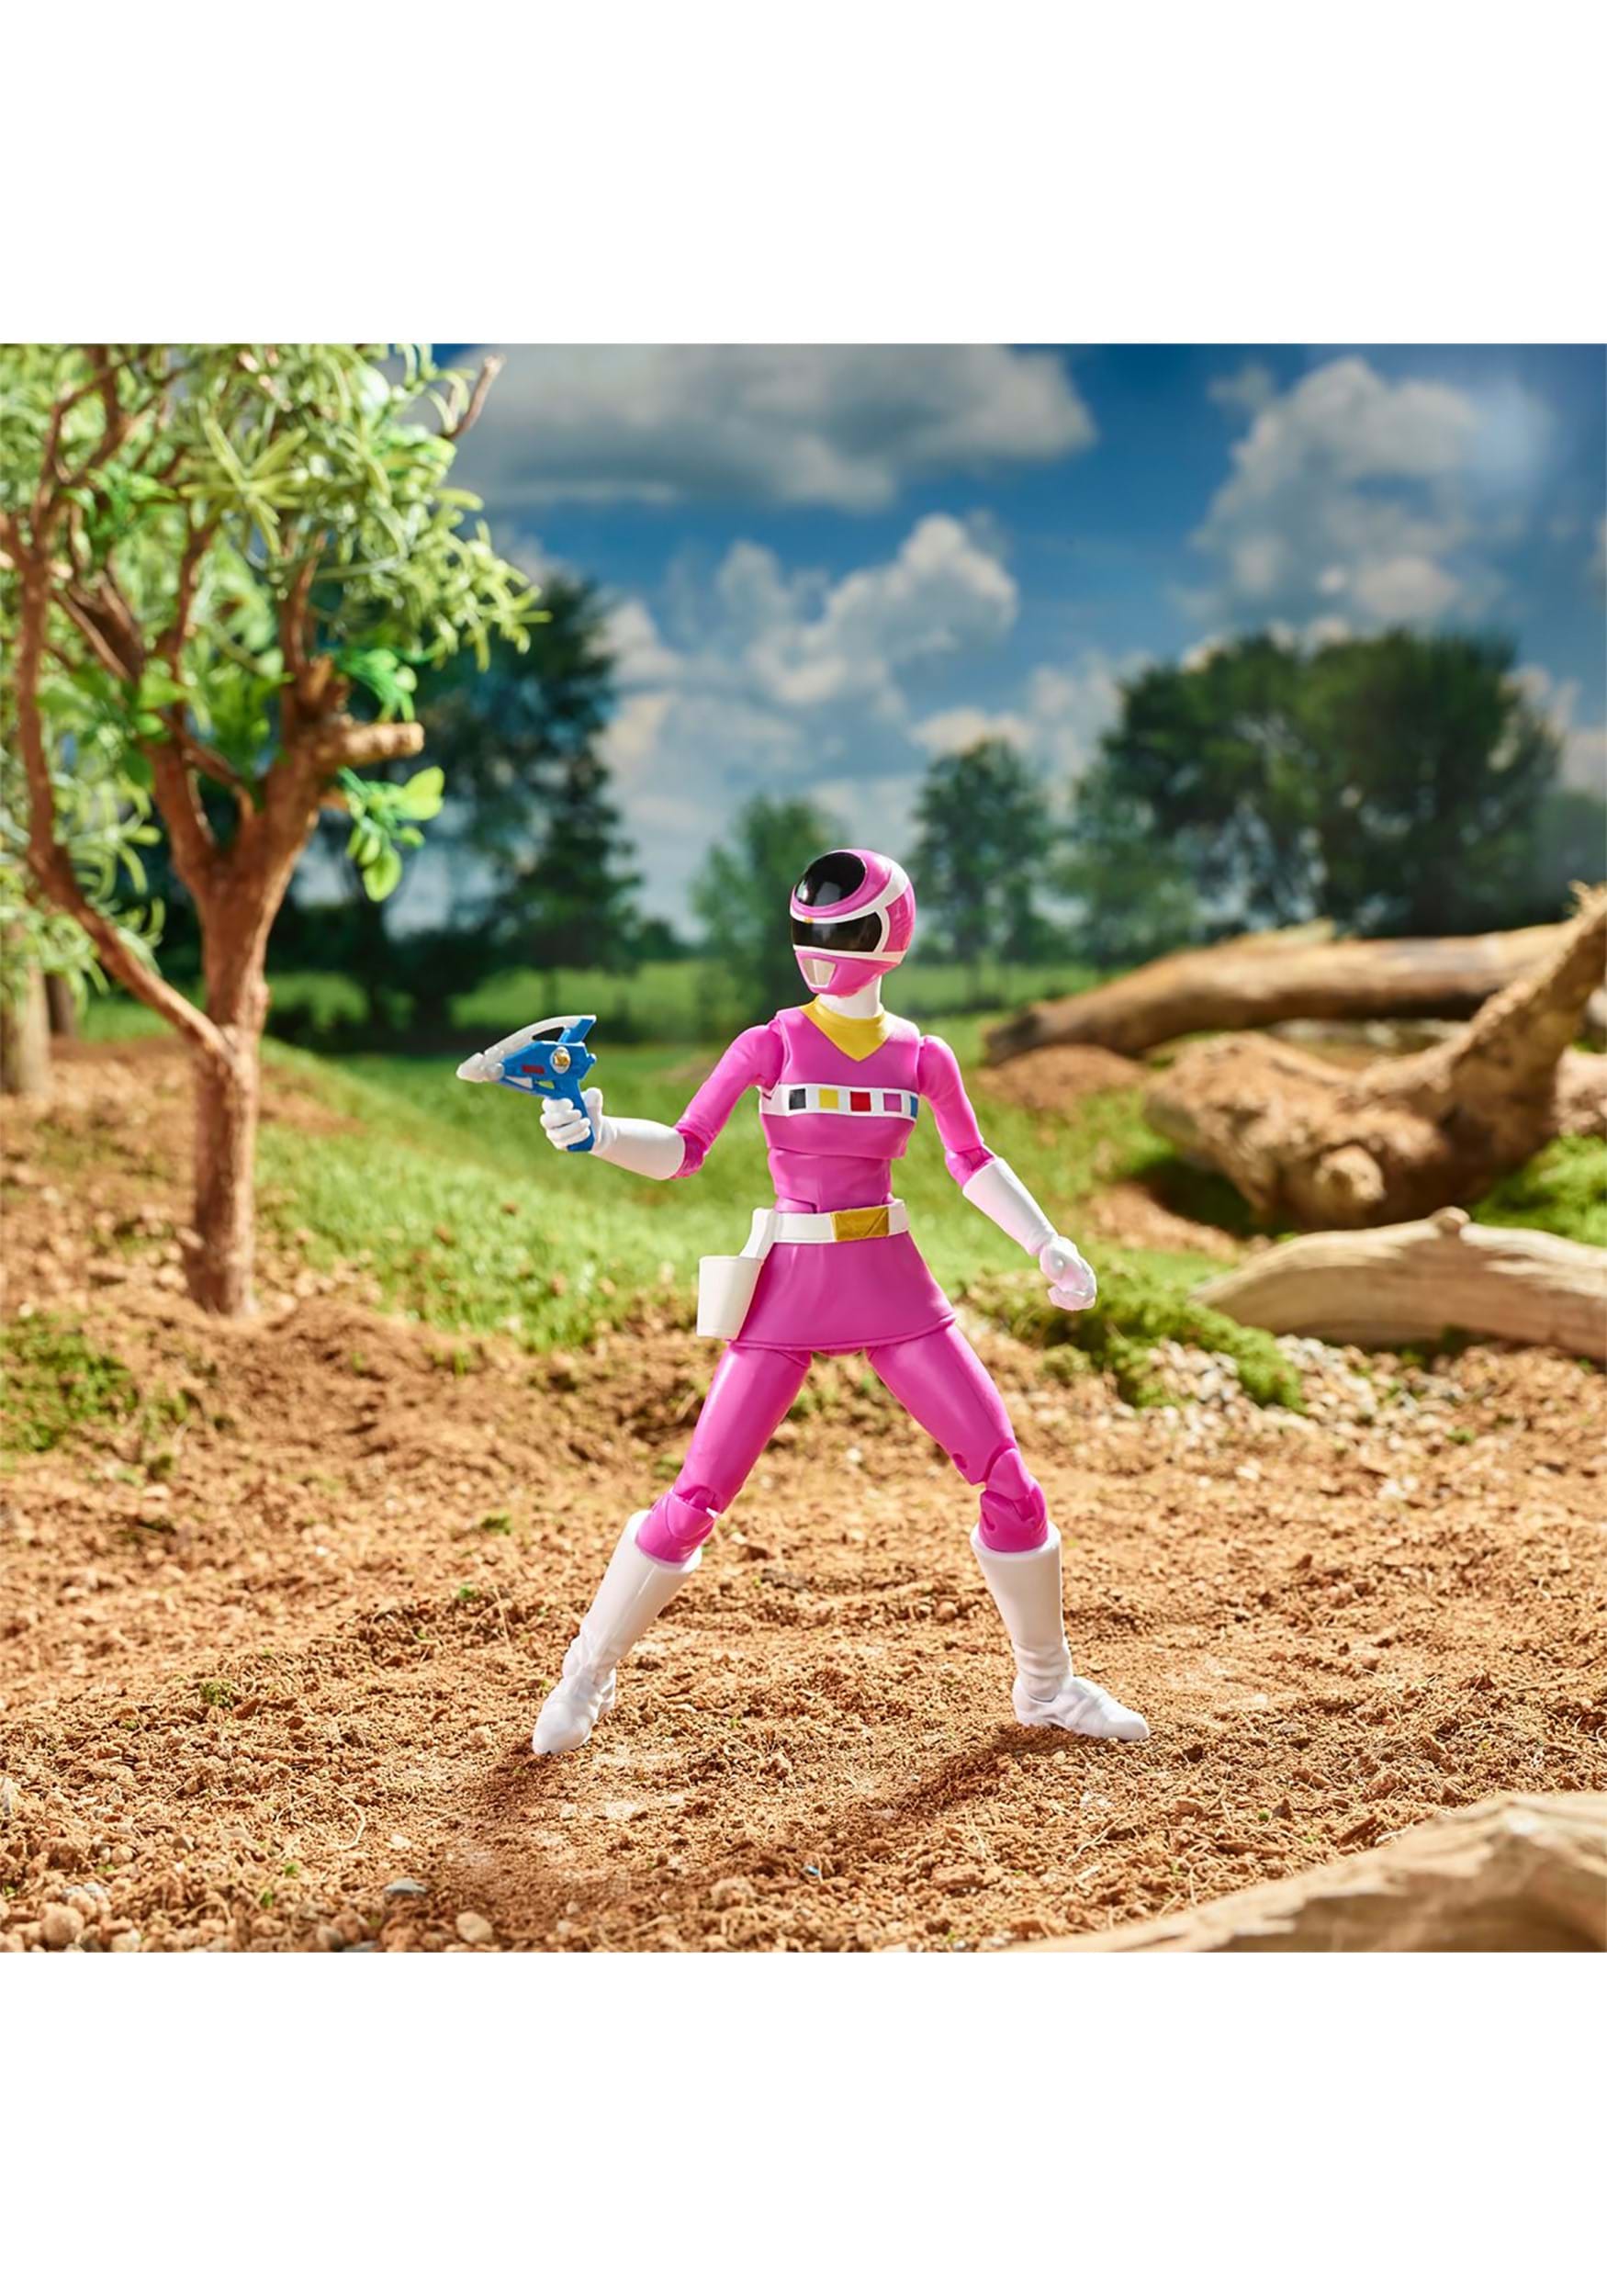 Power Rangers In Space Pink Ranger